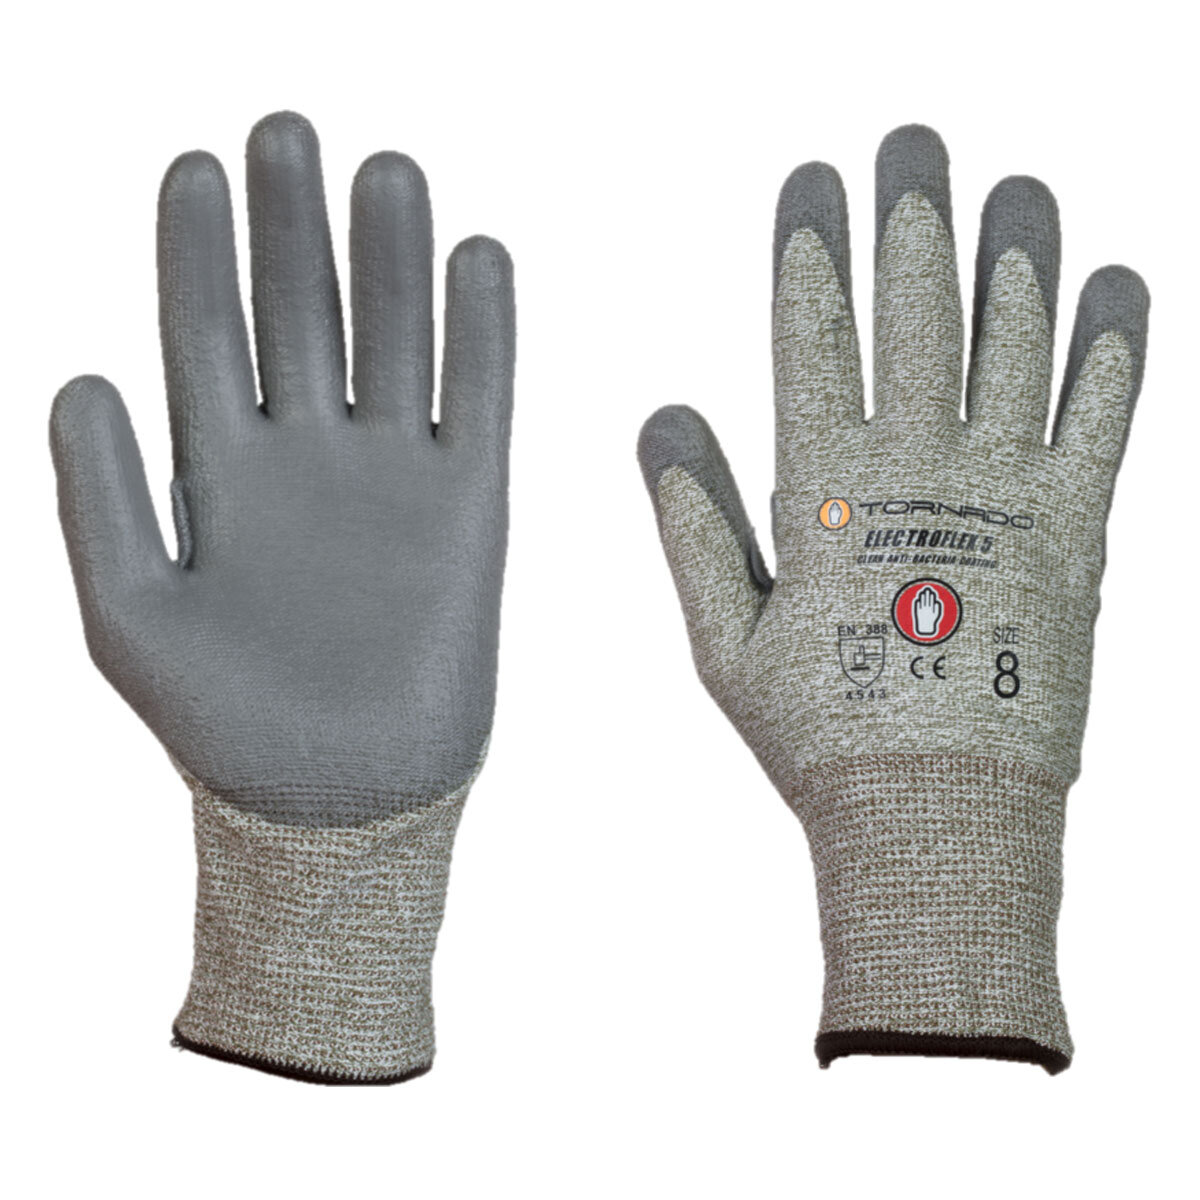 Tornado Electroflex 5 FTR Cut-Resistant Safety Gloves - 1...